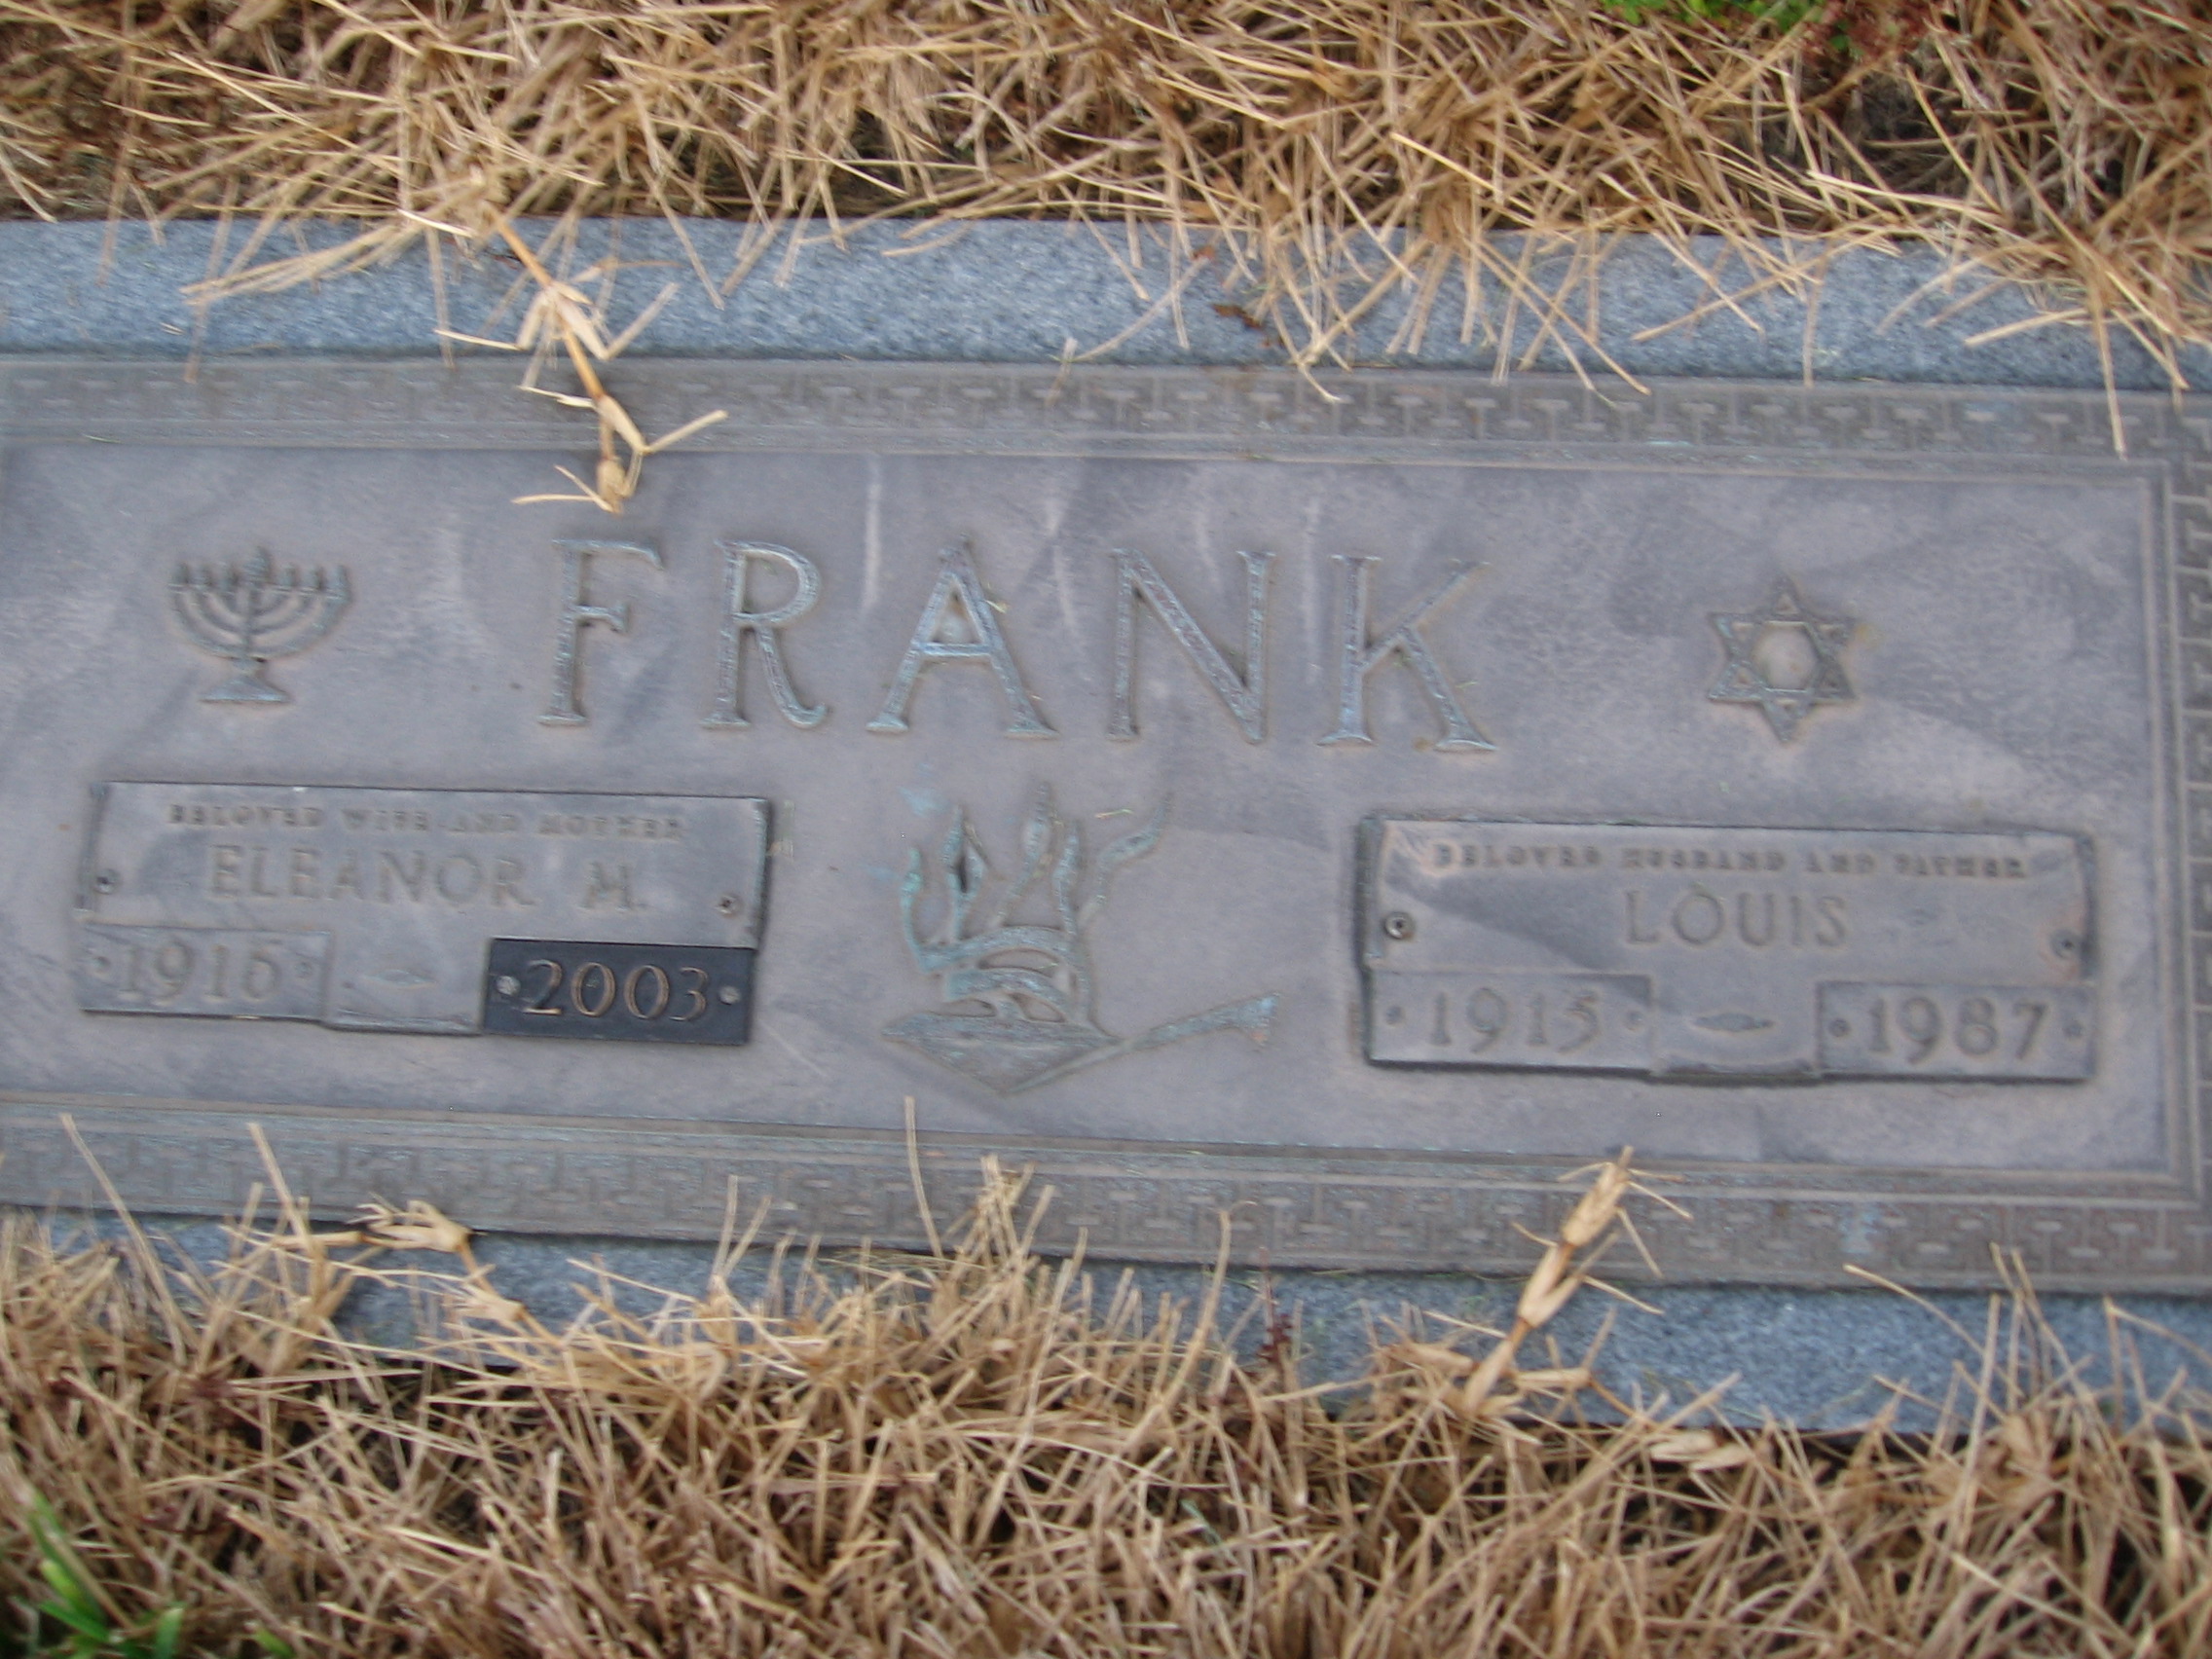 Louis Frank